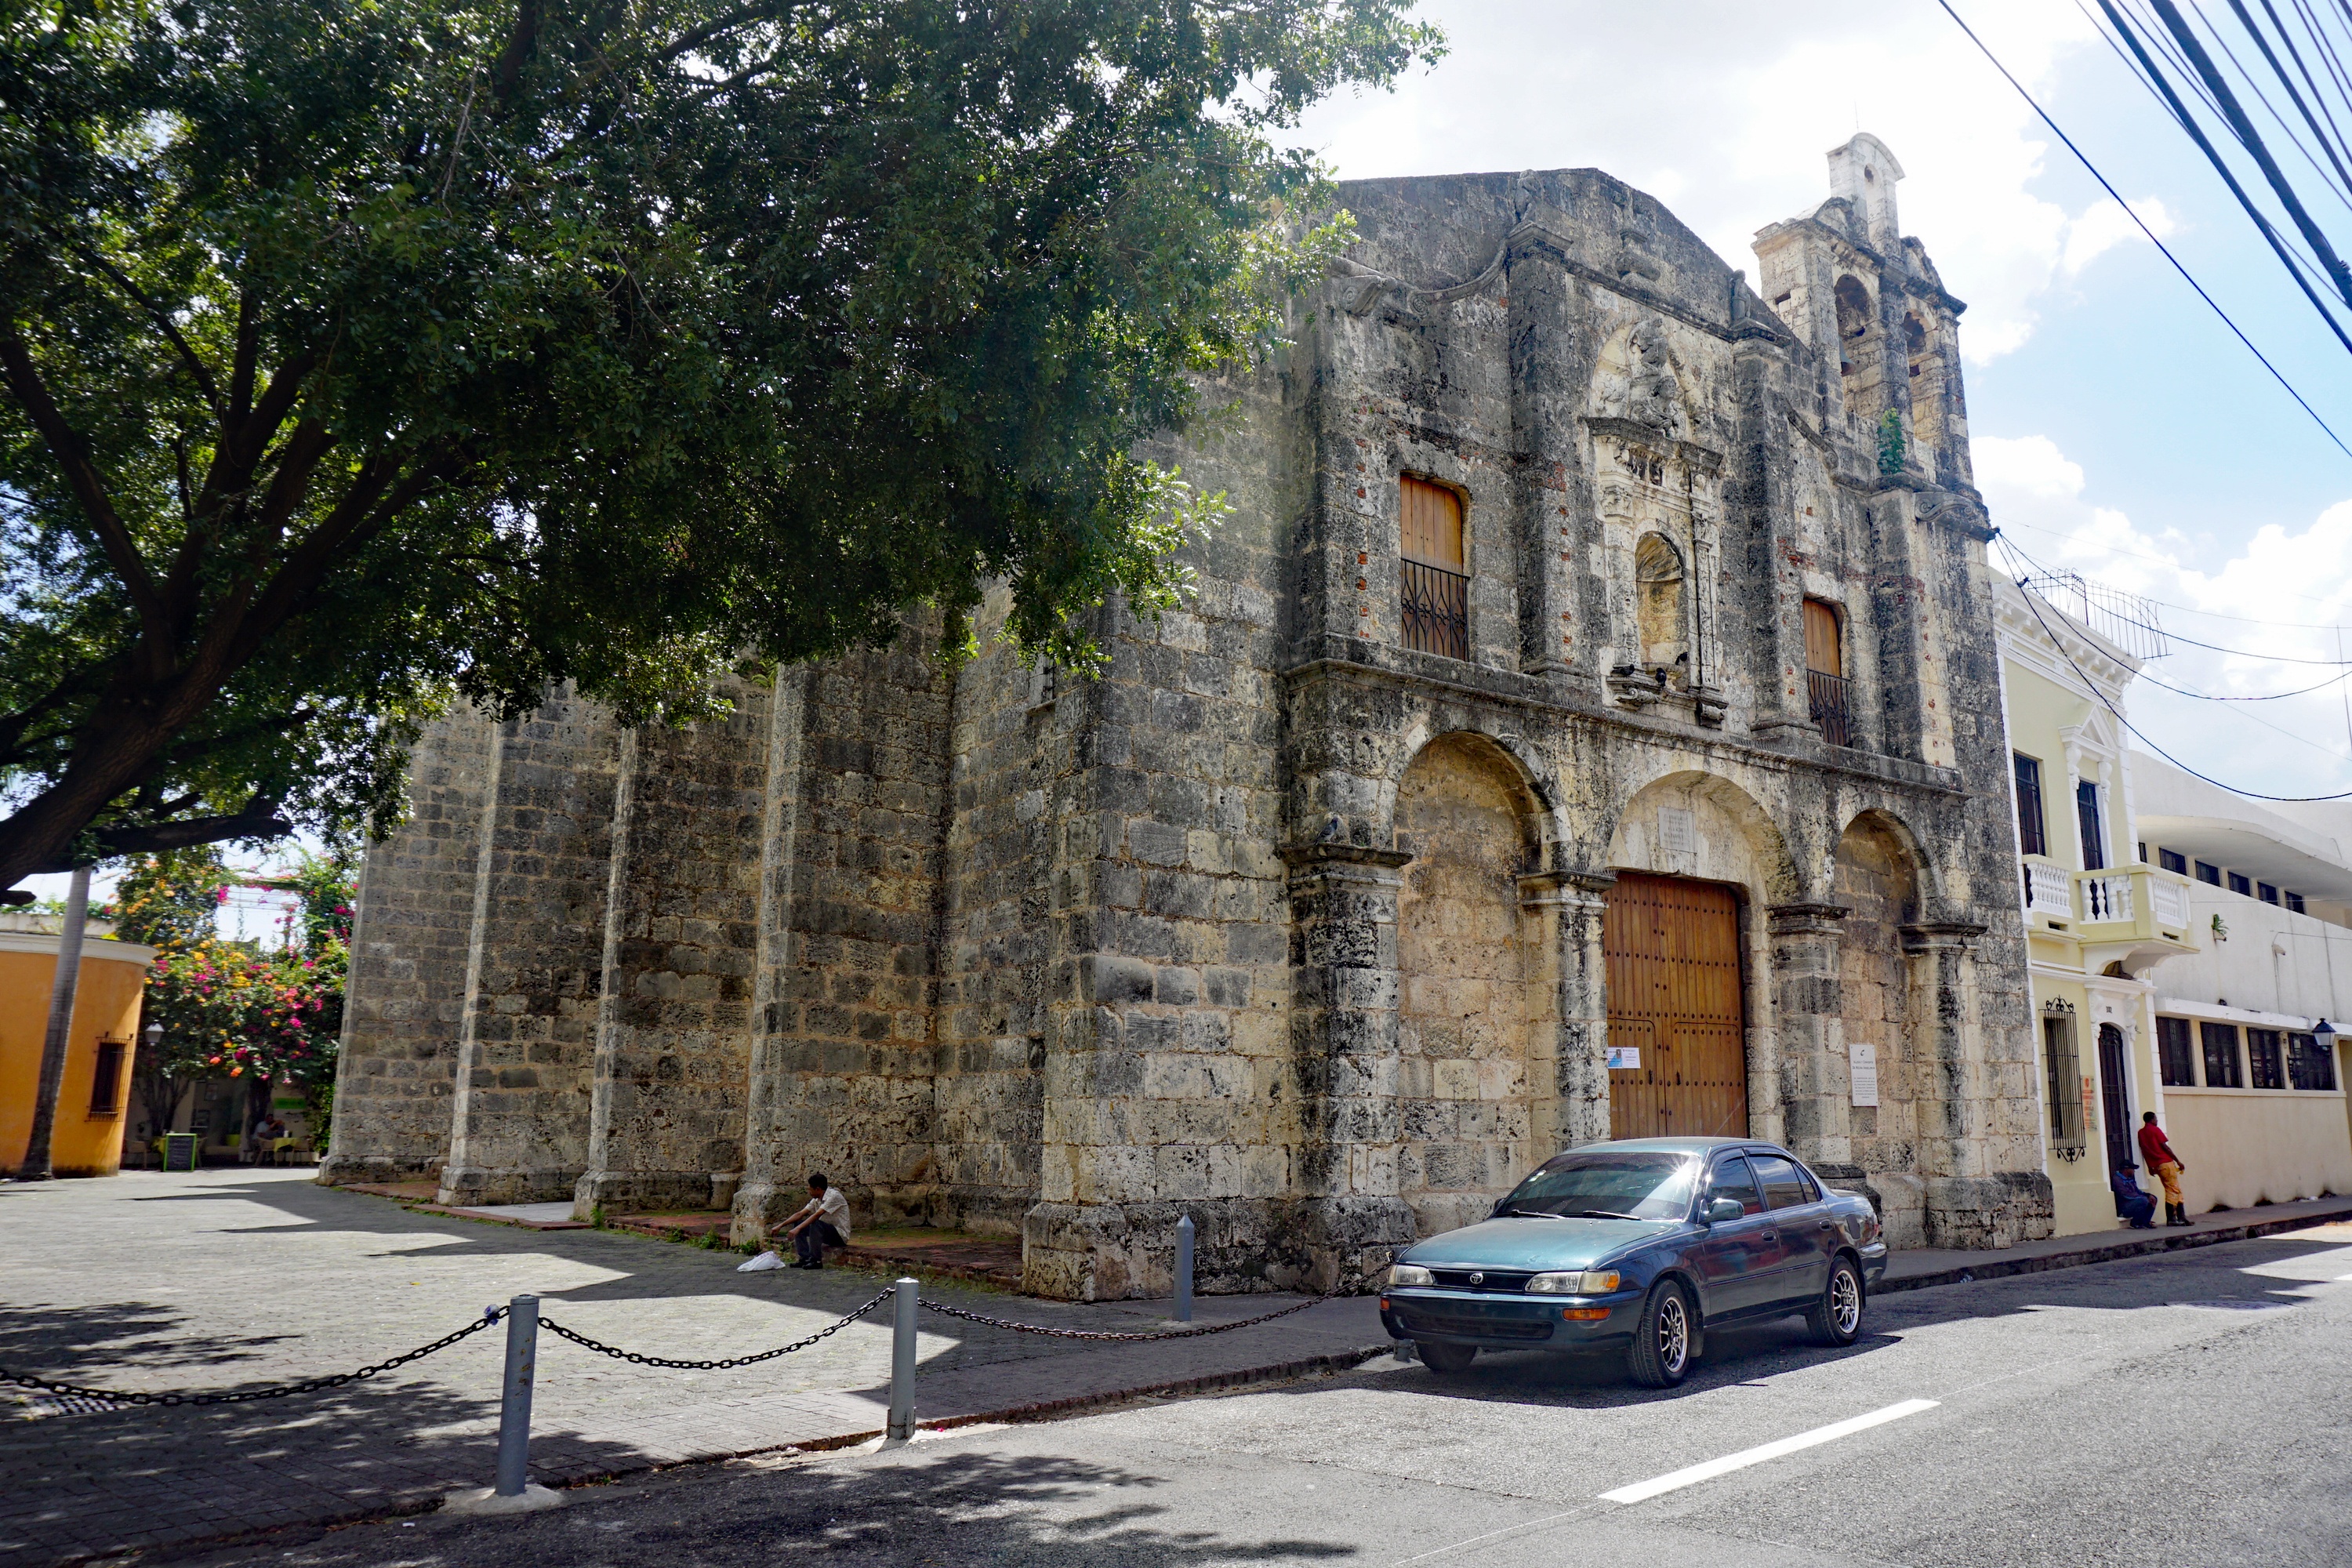 The Regina Angelorum Church and Convent of Santo Domingo